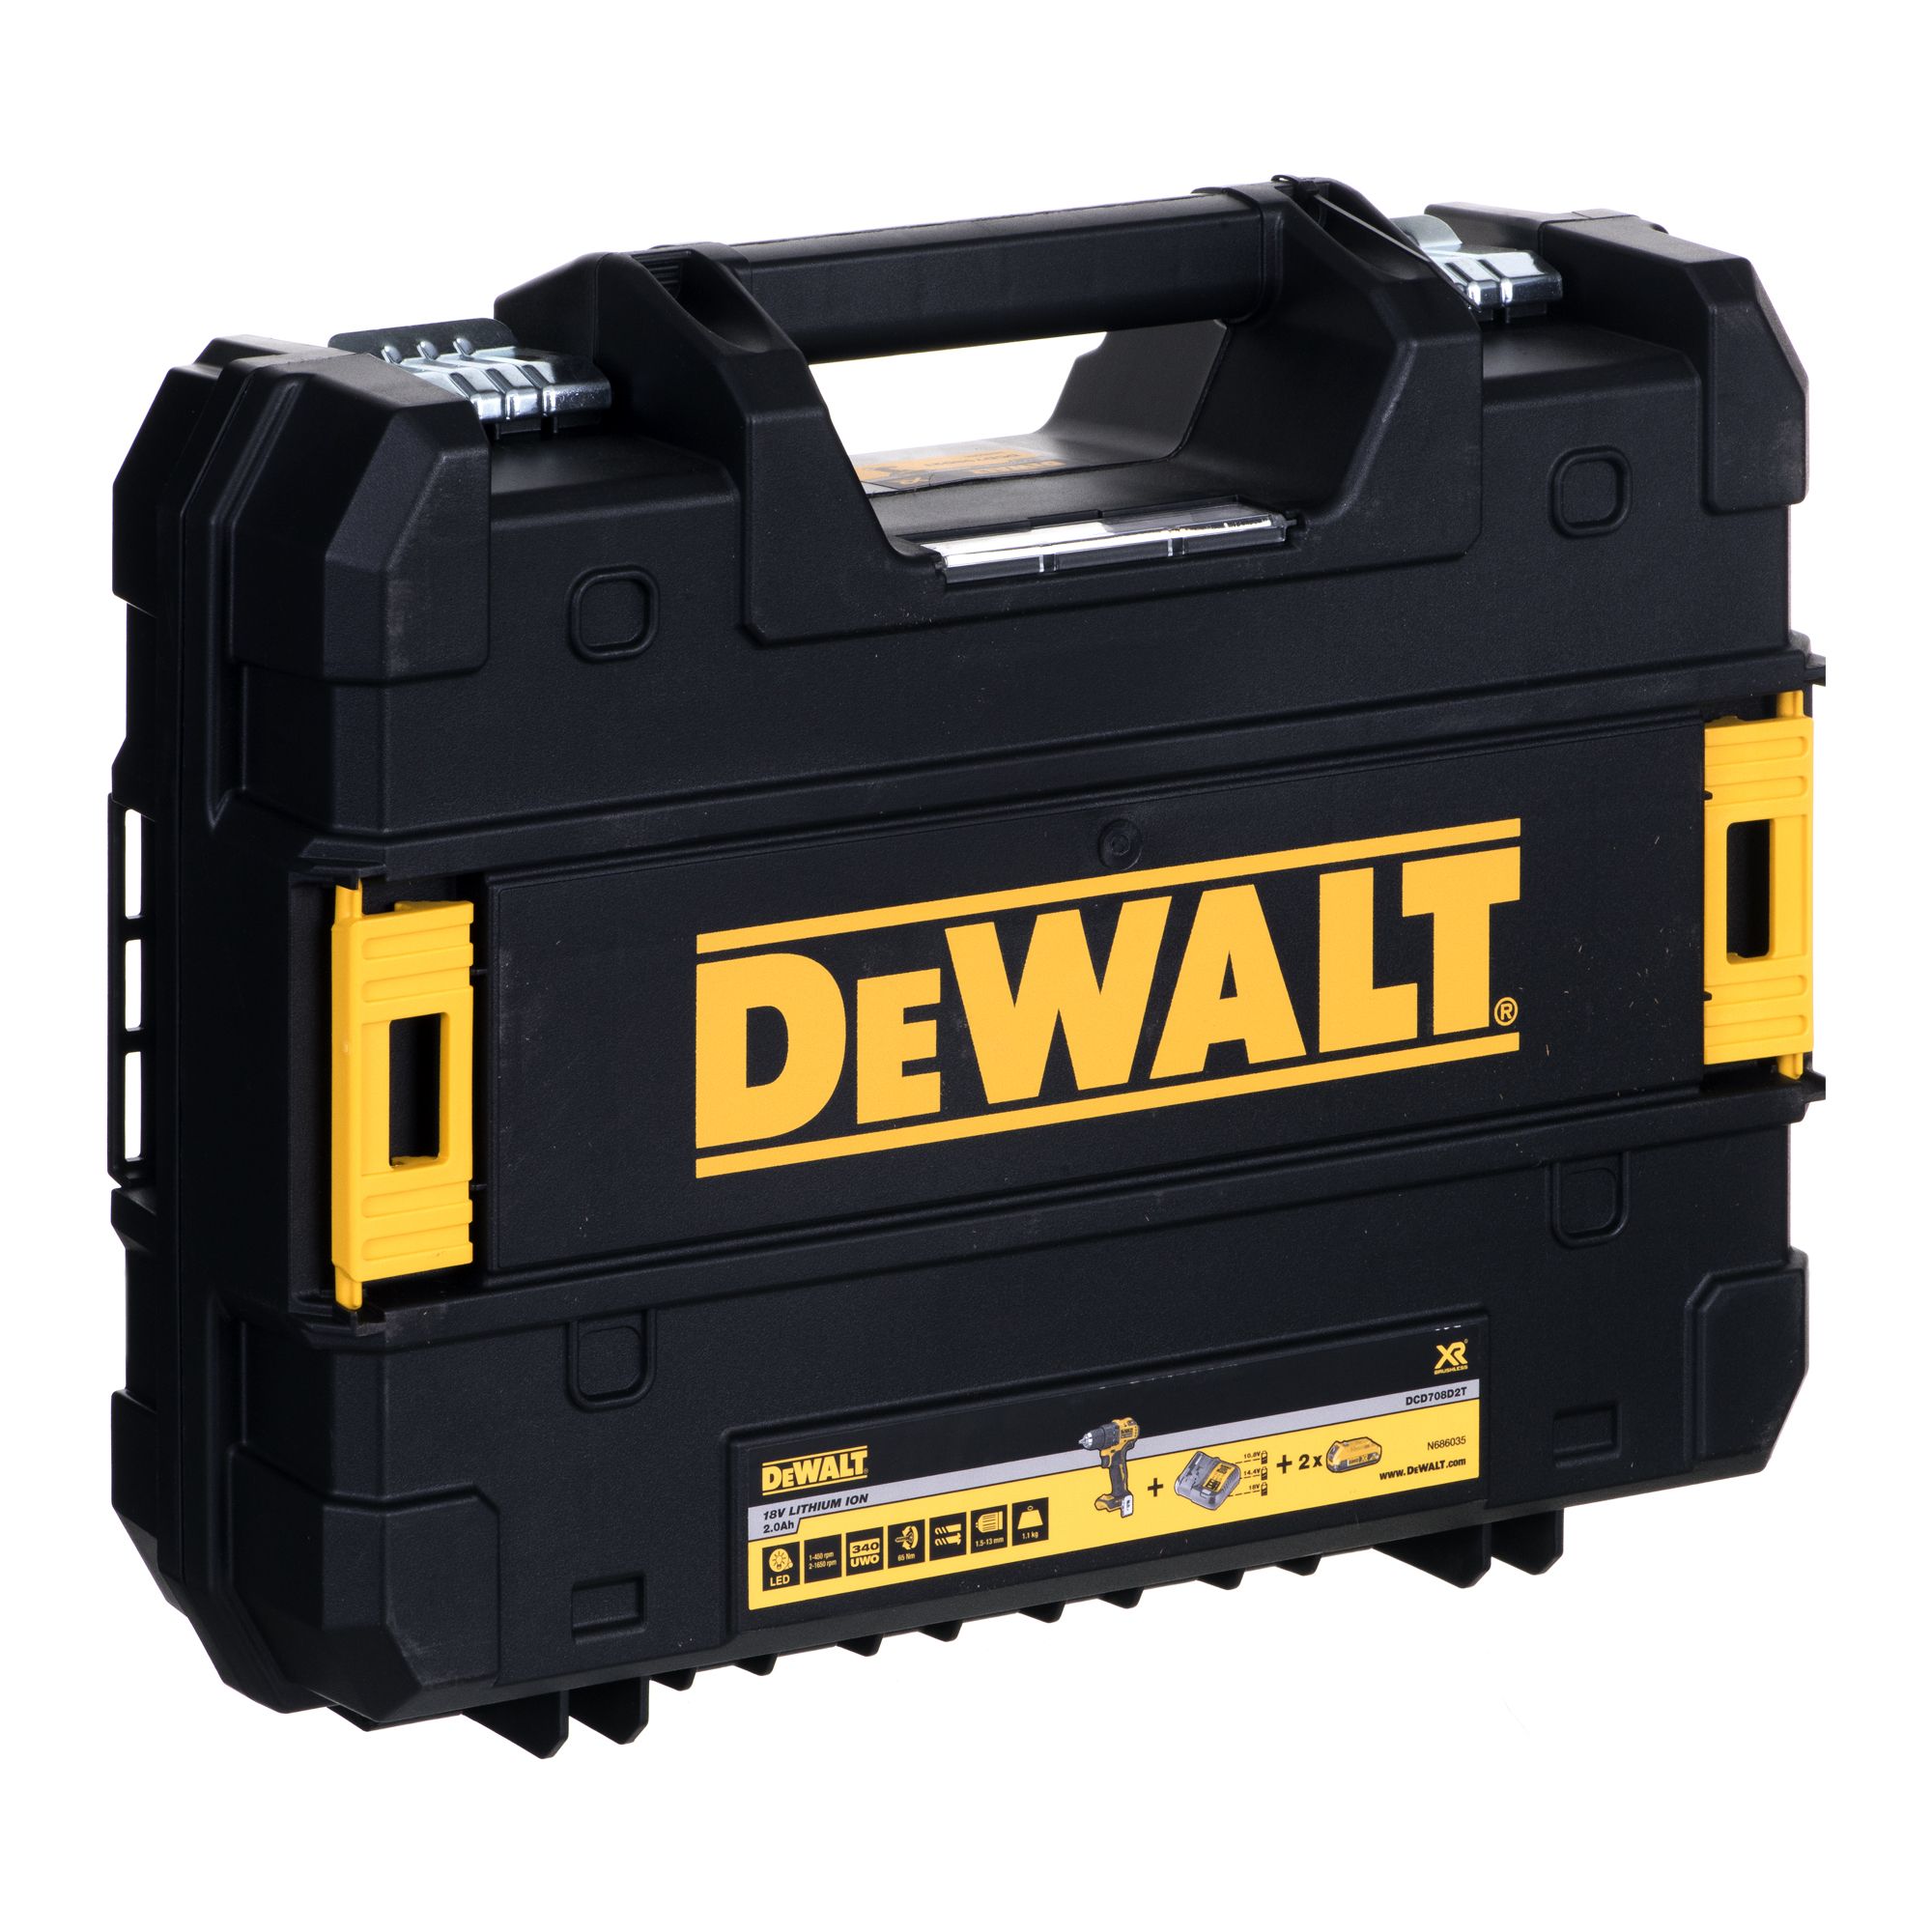 DeWALT DCD708D2T-QW power screwdriver/impact driver Black,Yellow 1650 RPM_9